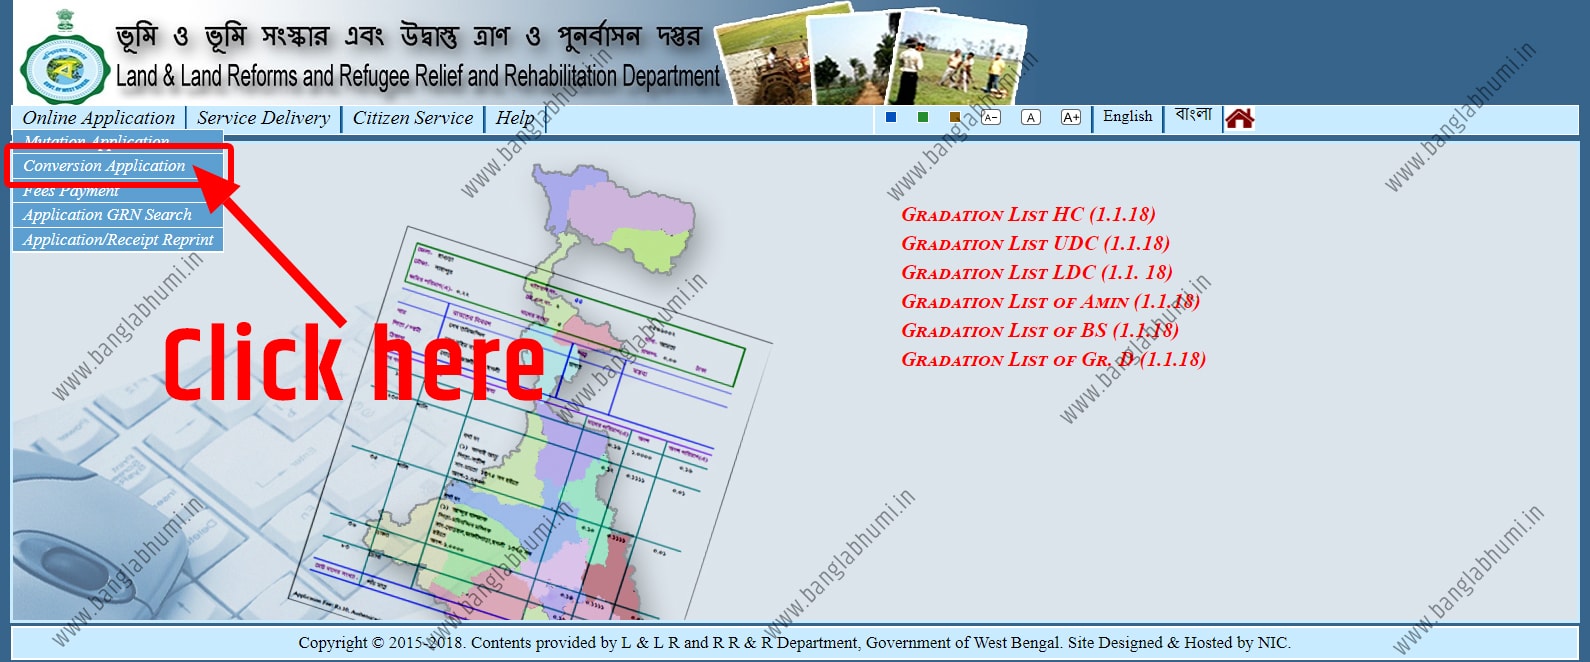 Online Conversion Application West Bengal Land & Land Reforms Department